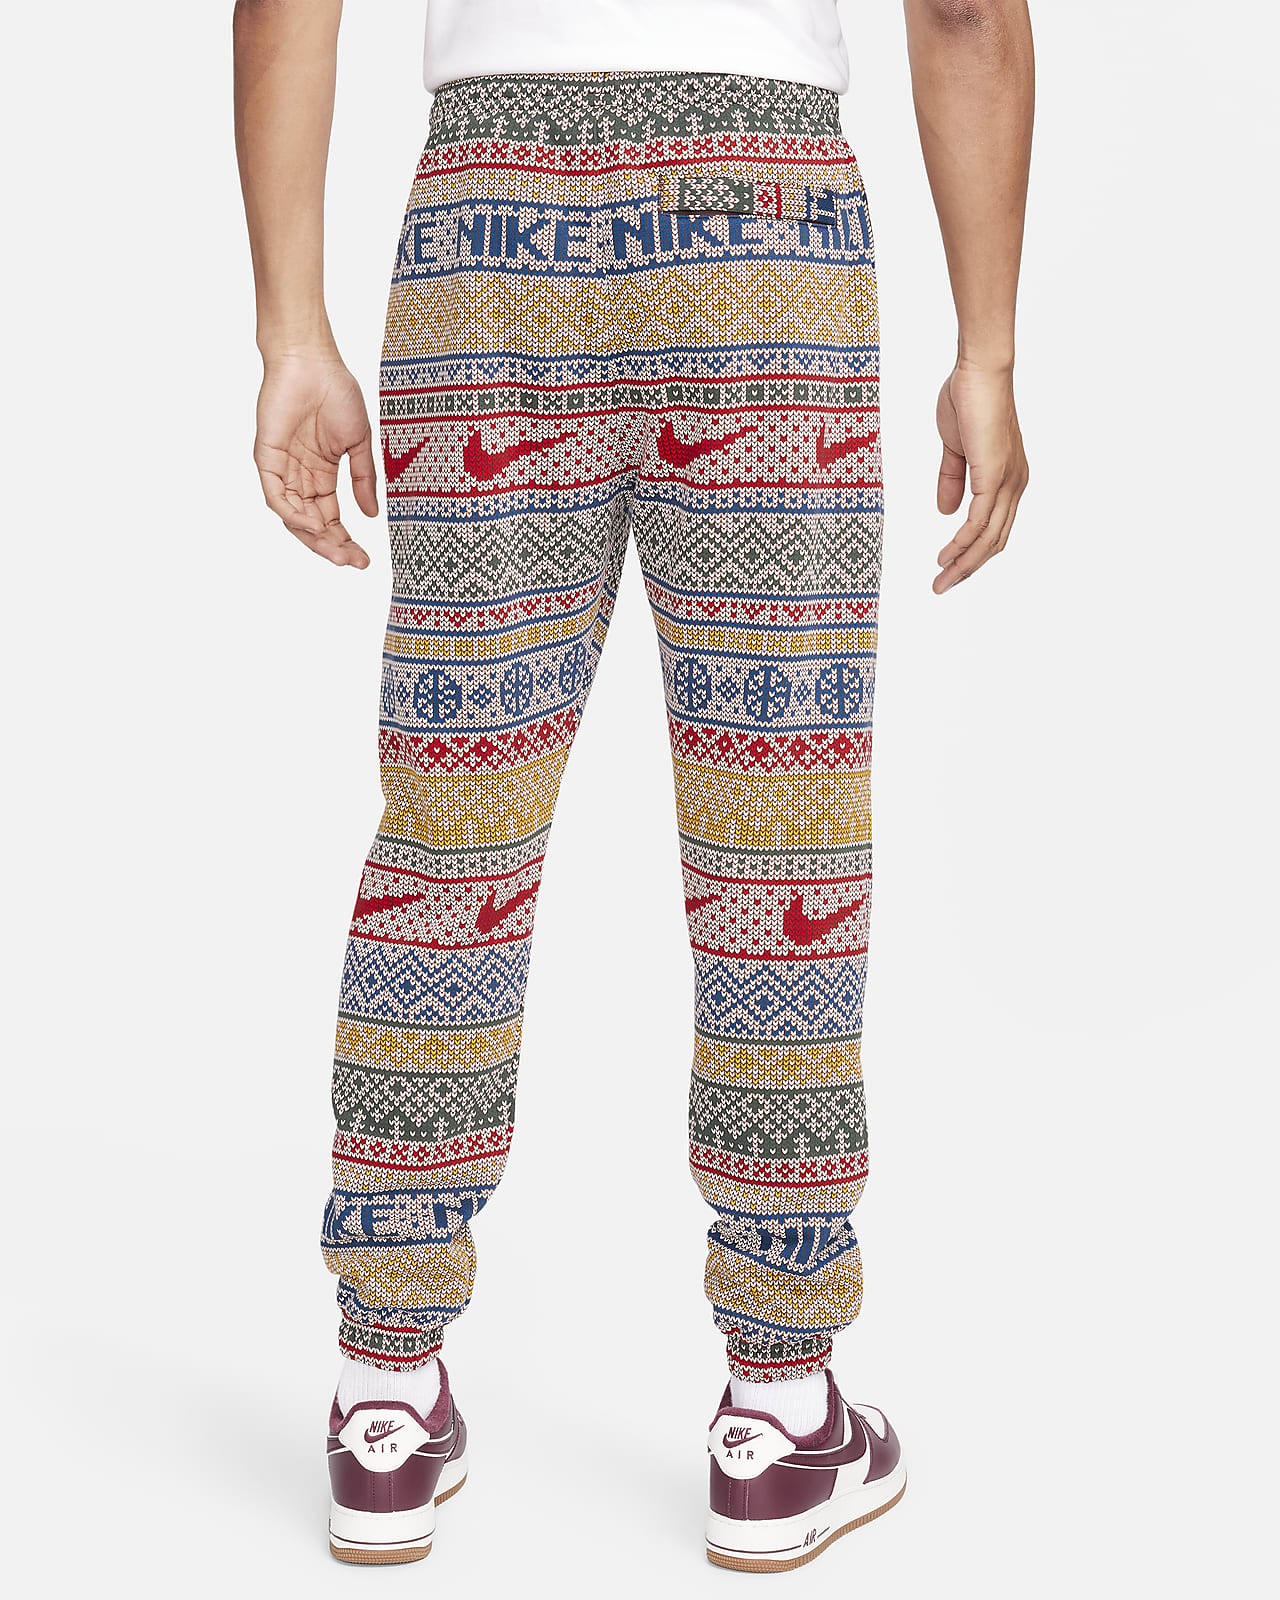 Club Holiday Nike Fleece Pants. Sportswear